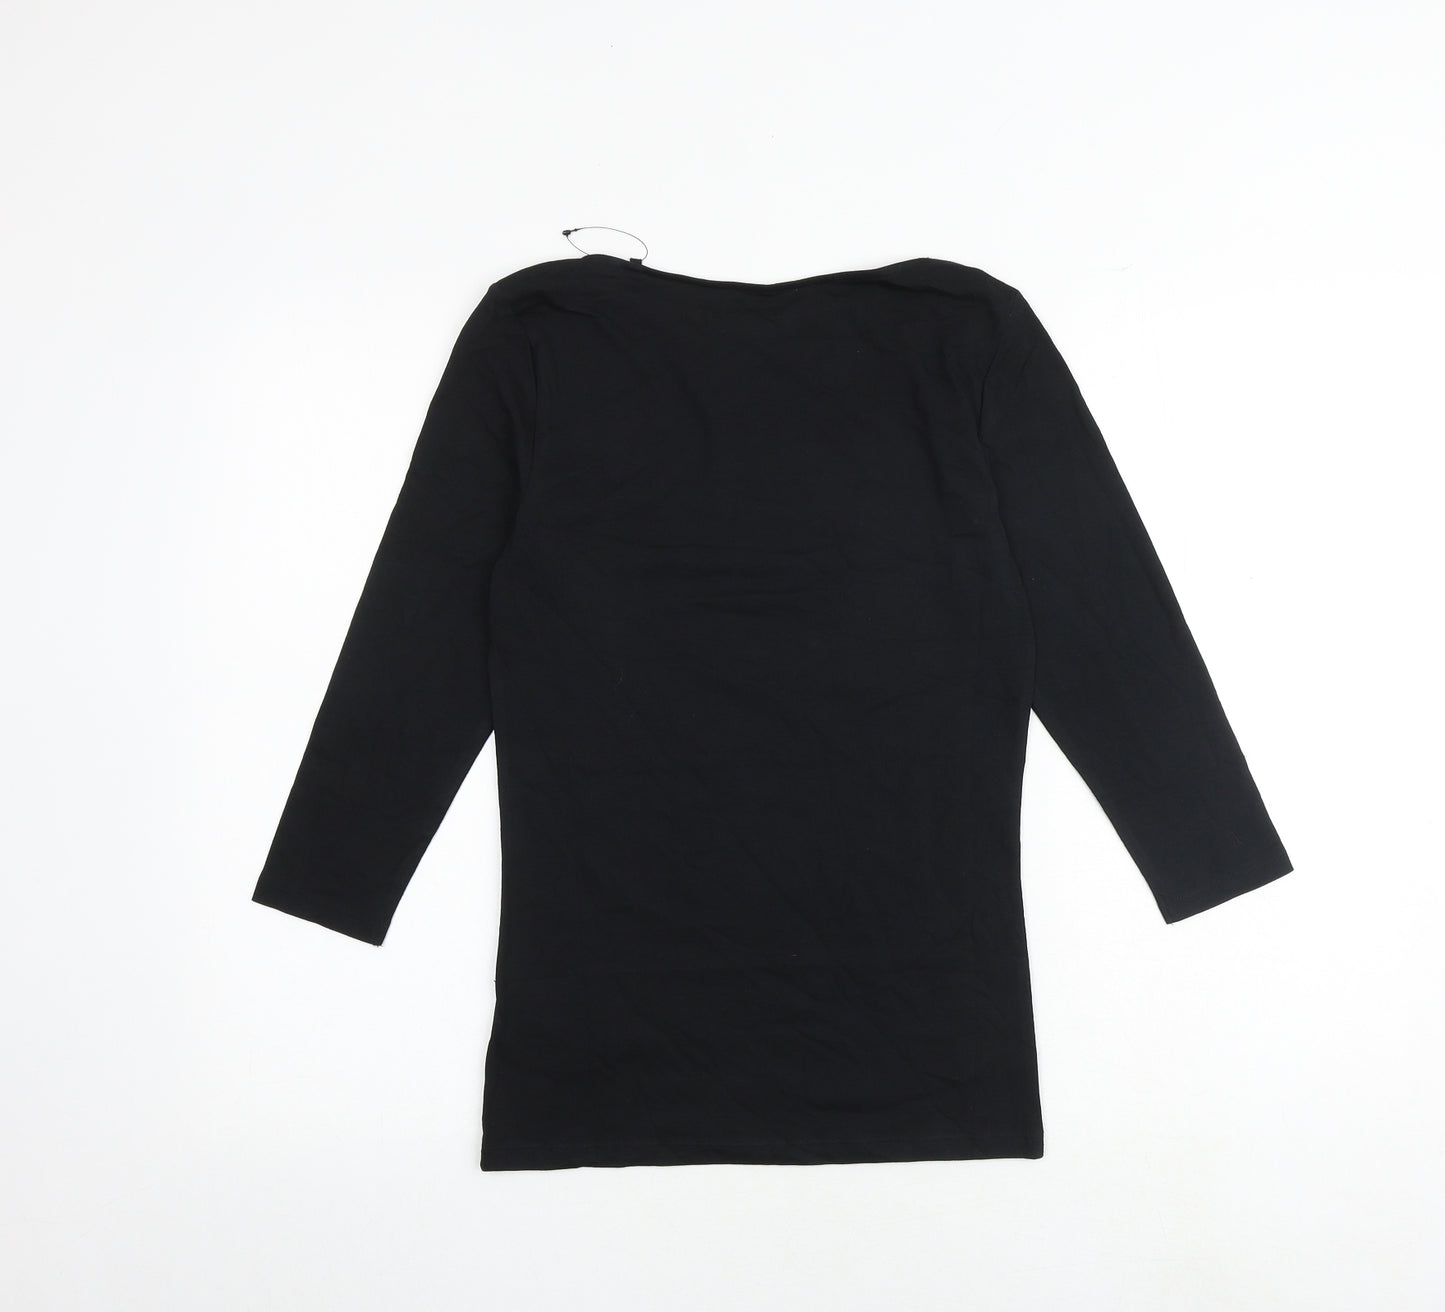 Marks and Spencer Womens Black Cotton Basic T-Shirt Size 8 Boat Neck - Slash Neck